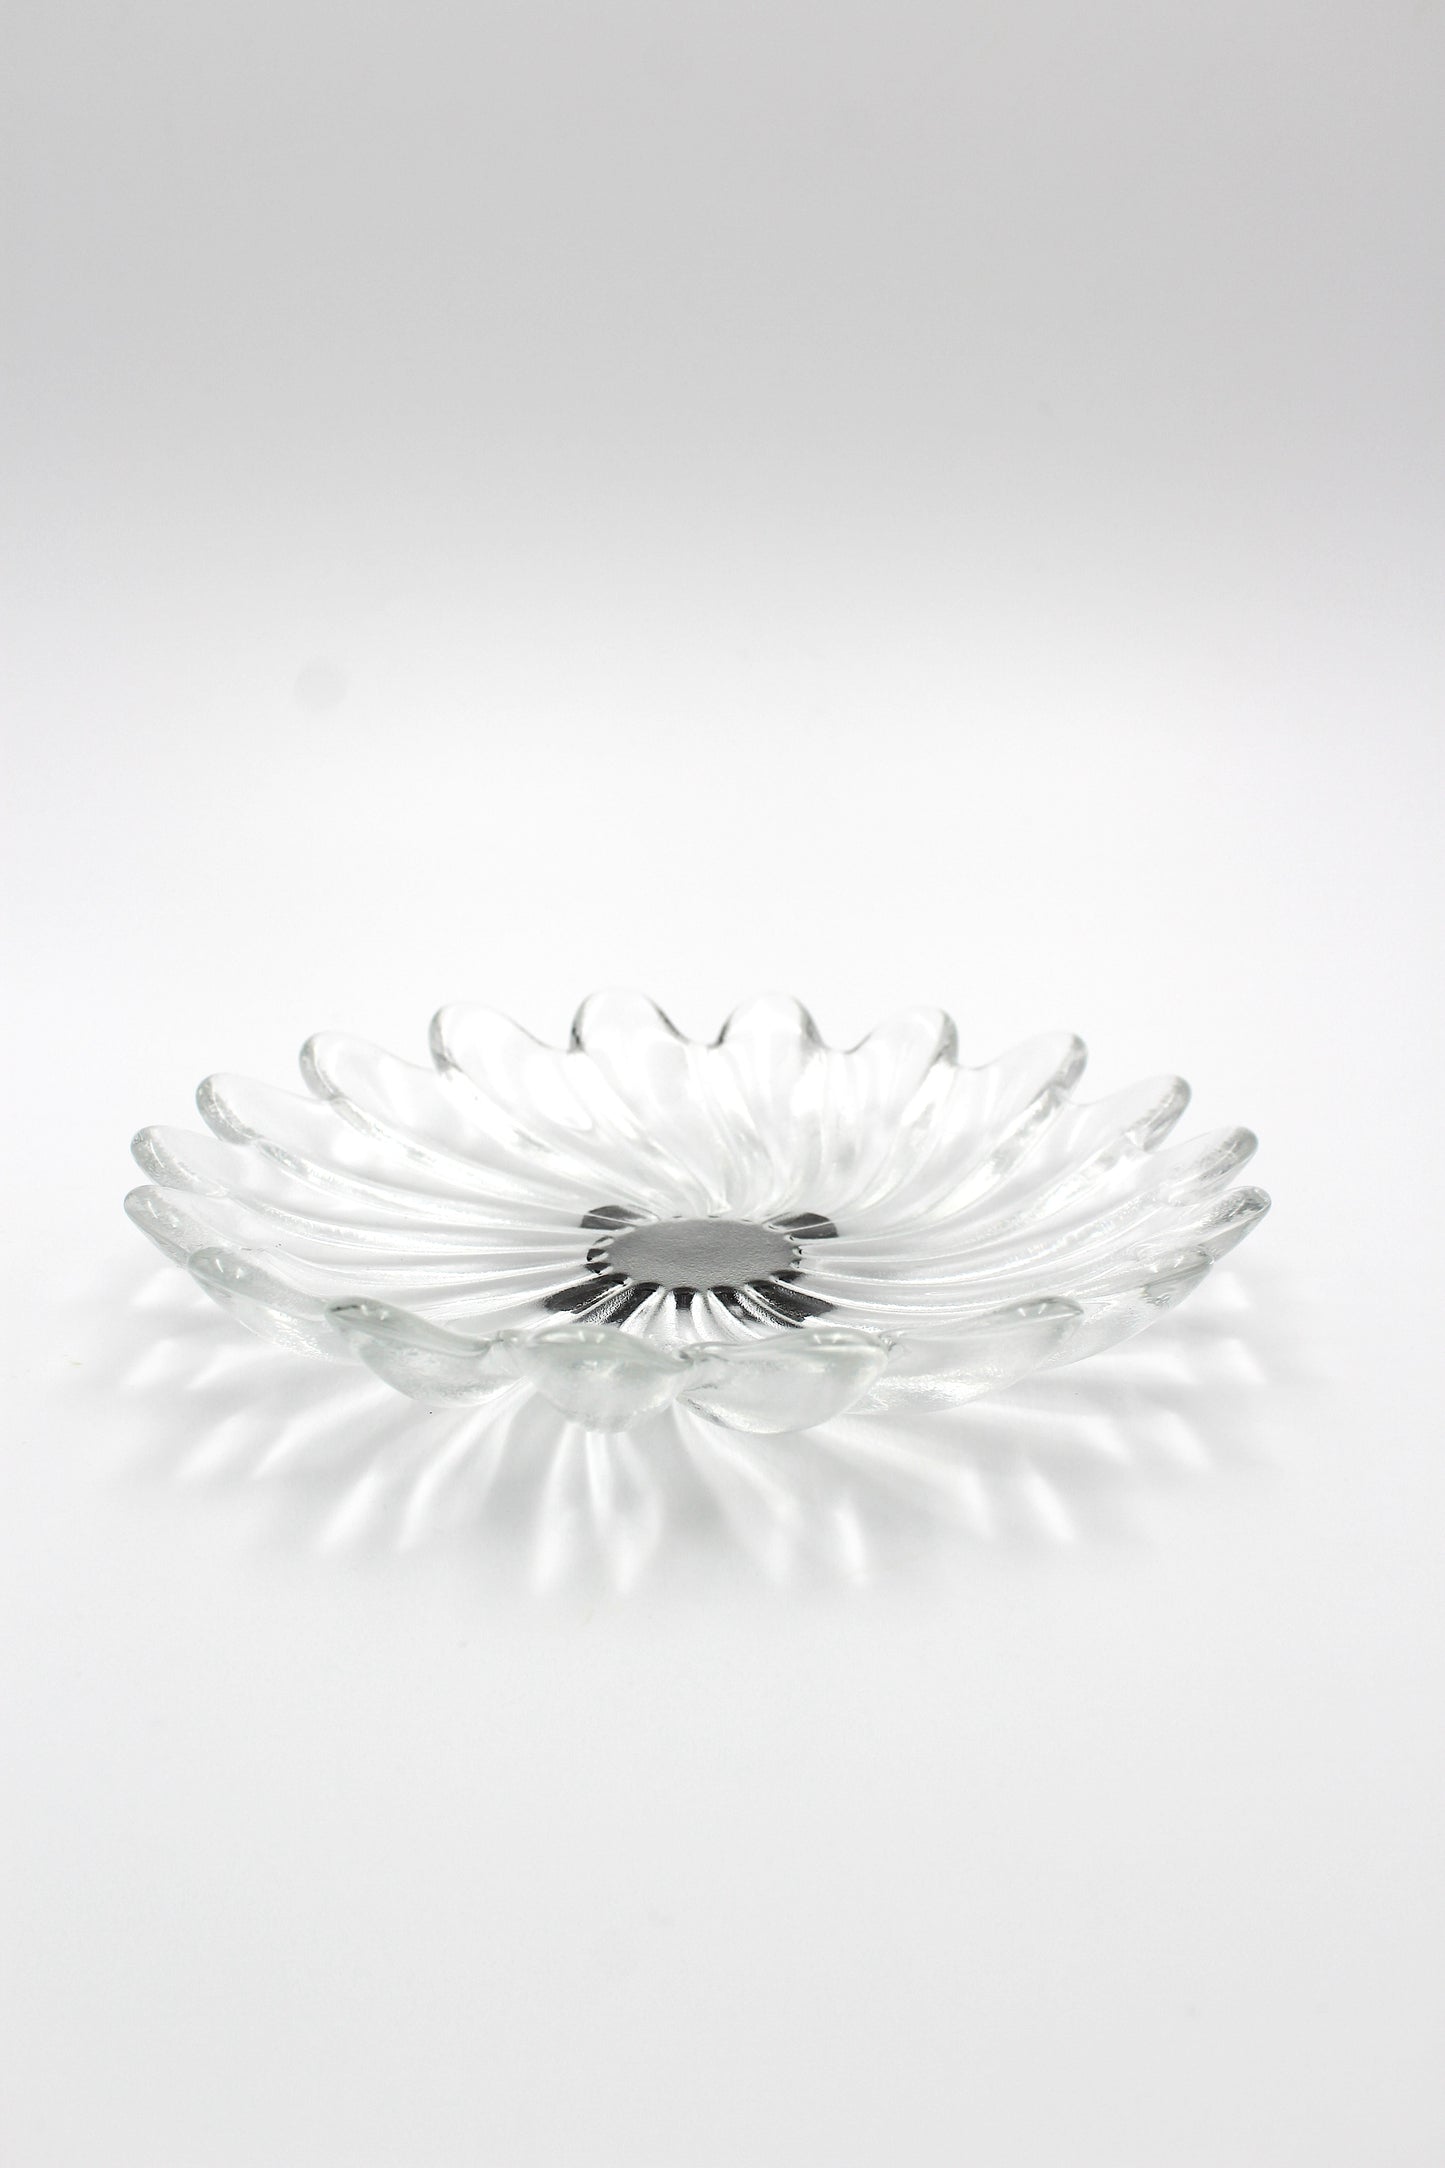 Waltherglas - Glass dish, Silberstein Collection